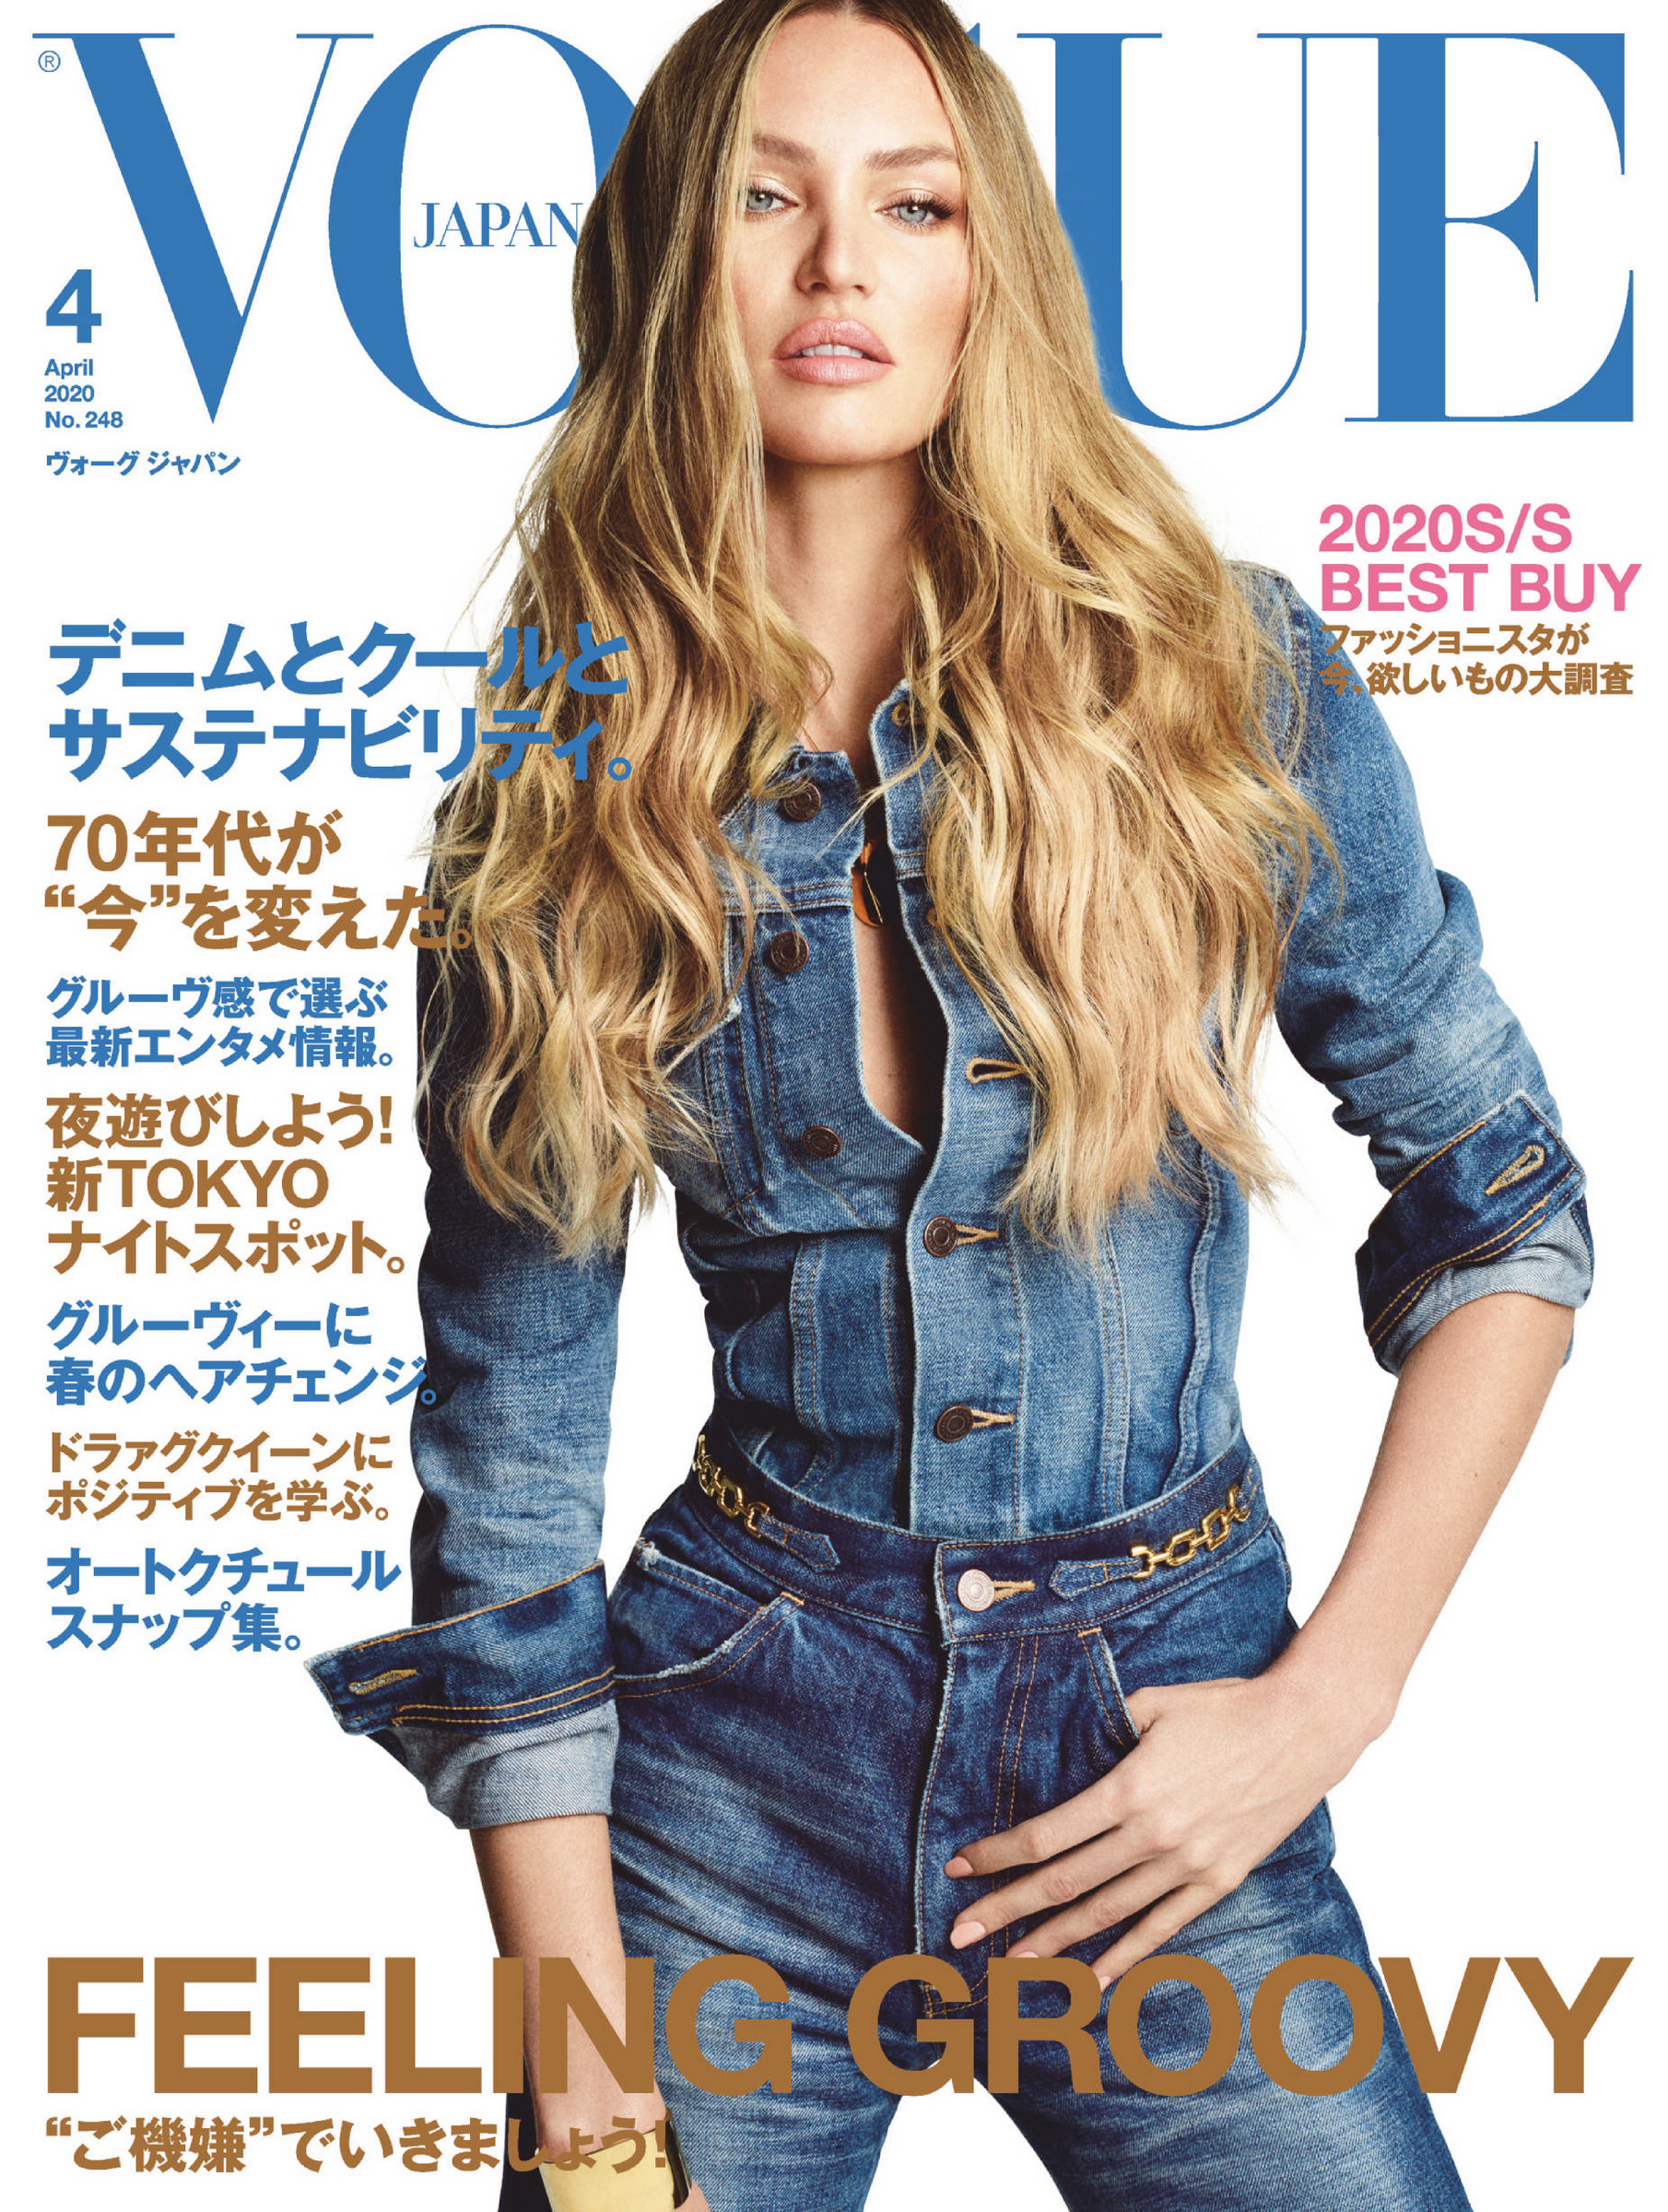 FOTOS Topless Modelos en Denim para Vogue Japn - Photo 3